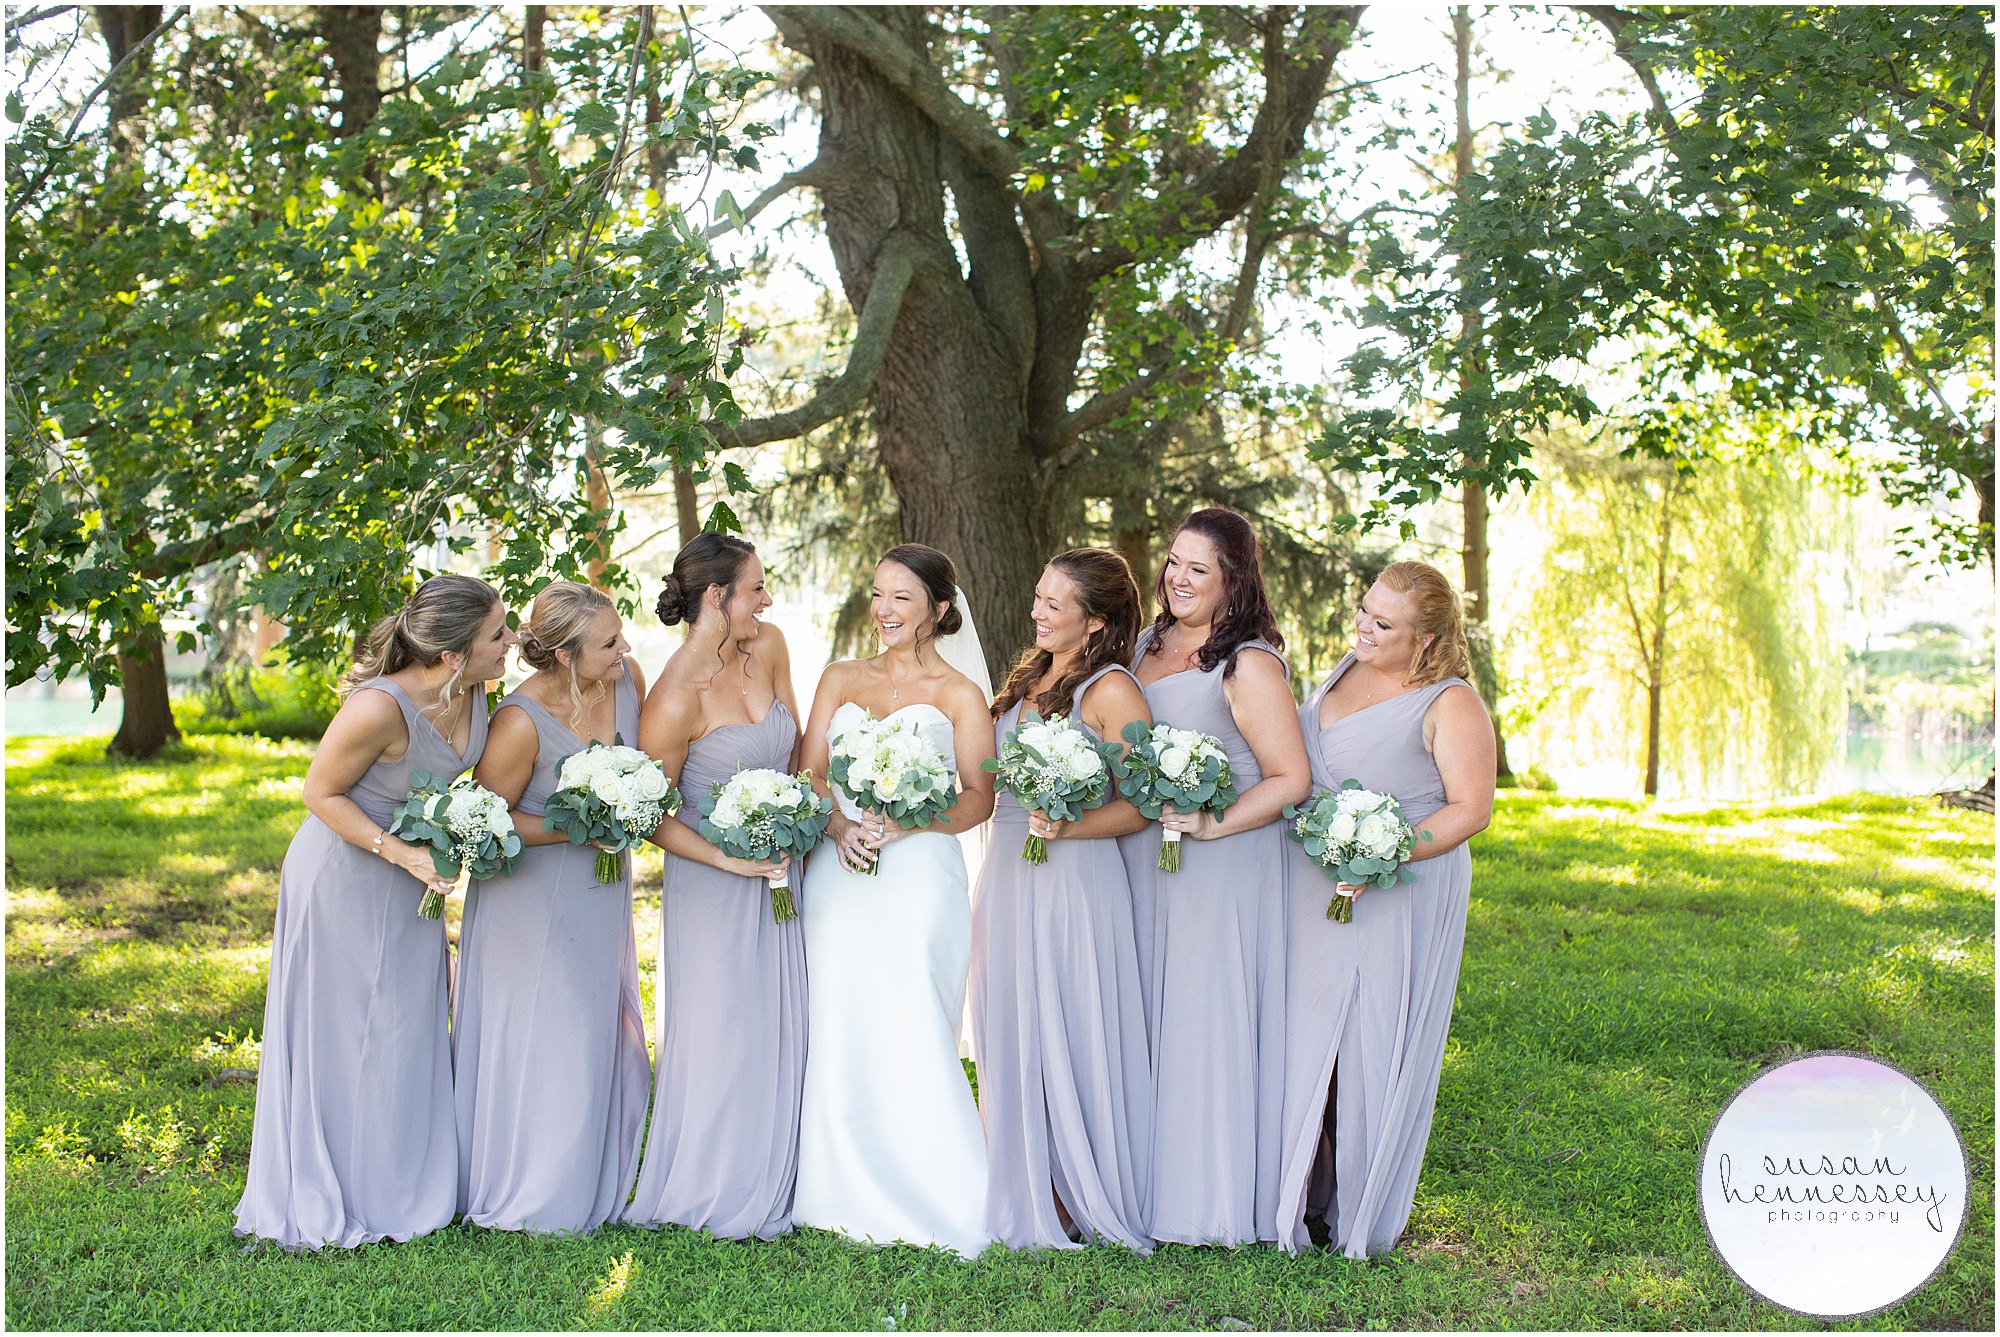 Bride and bridesmaids at New Jersey Summer wedding